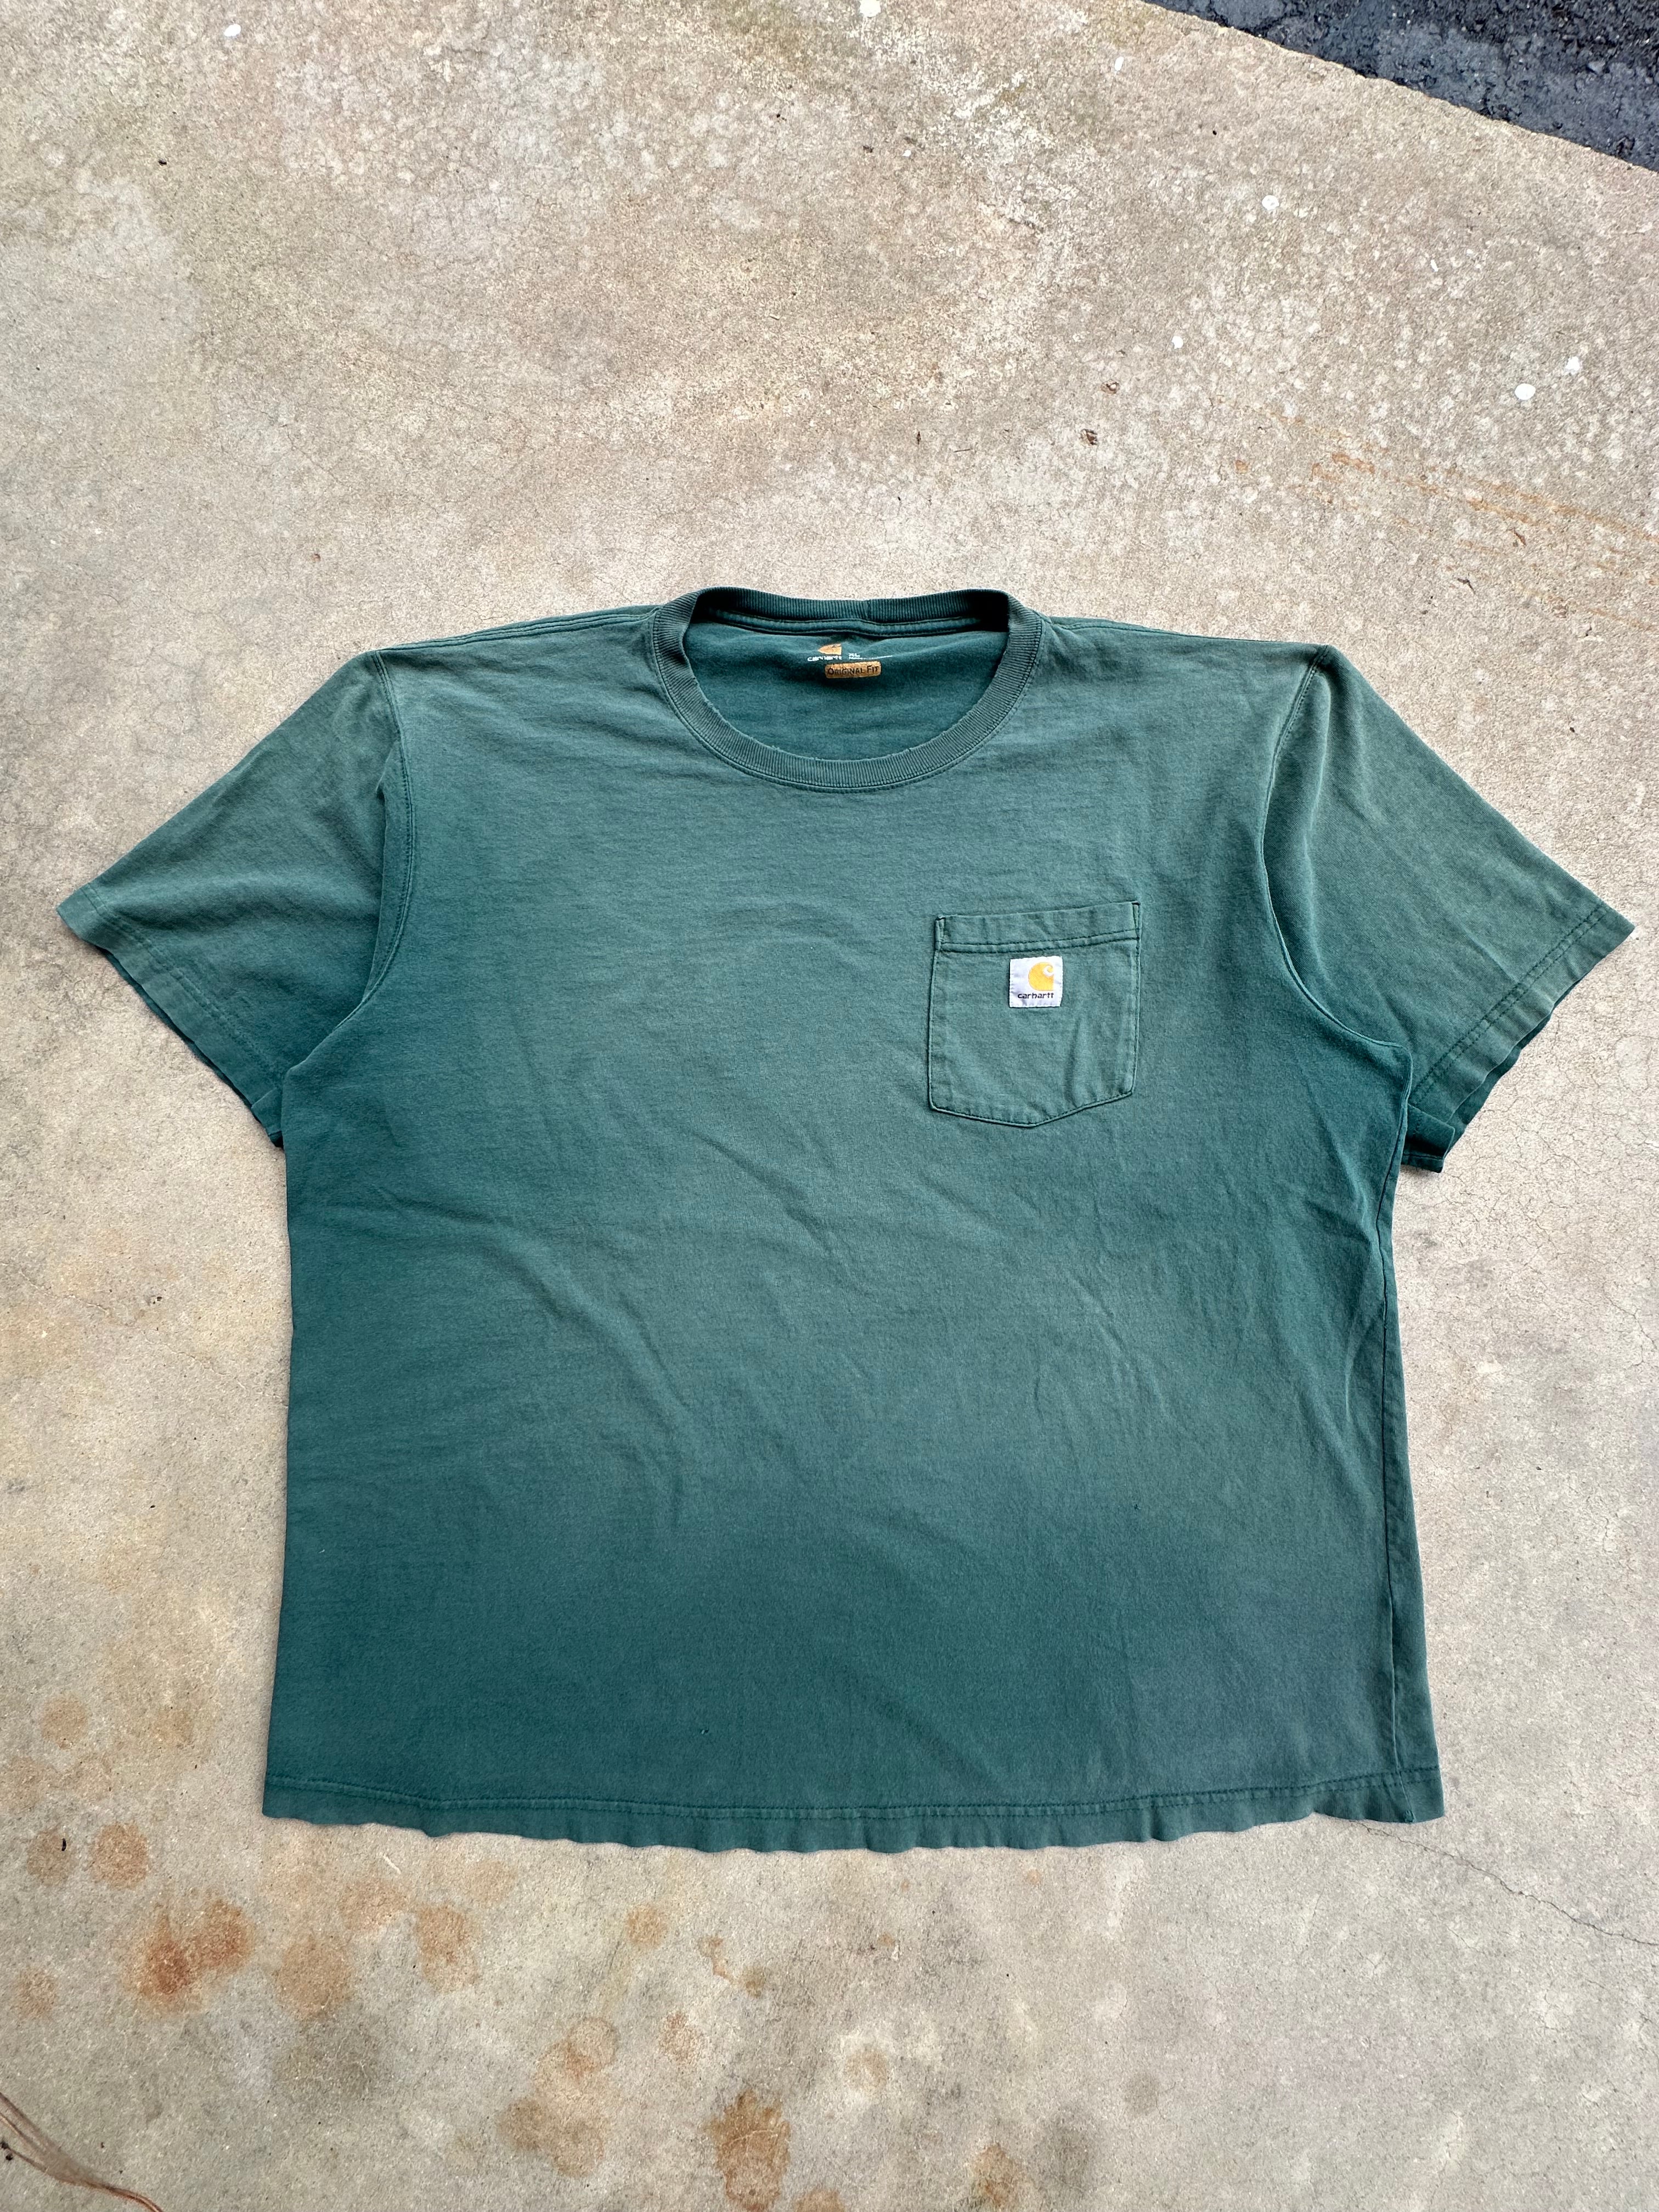 Faded/Distressed Forrest Green Carhartt T-Shirt